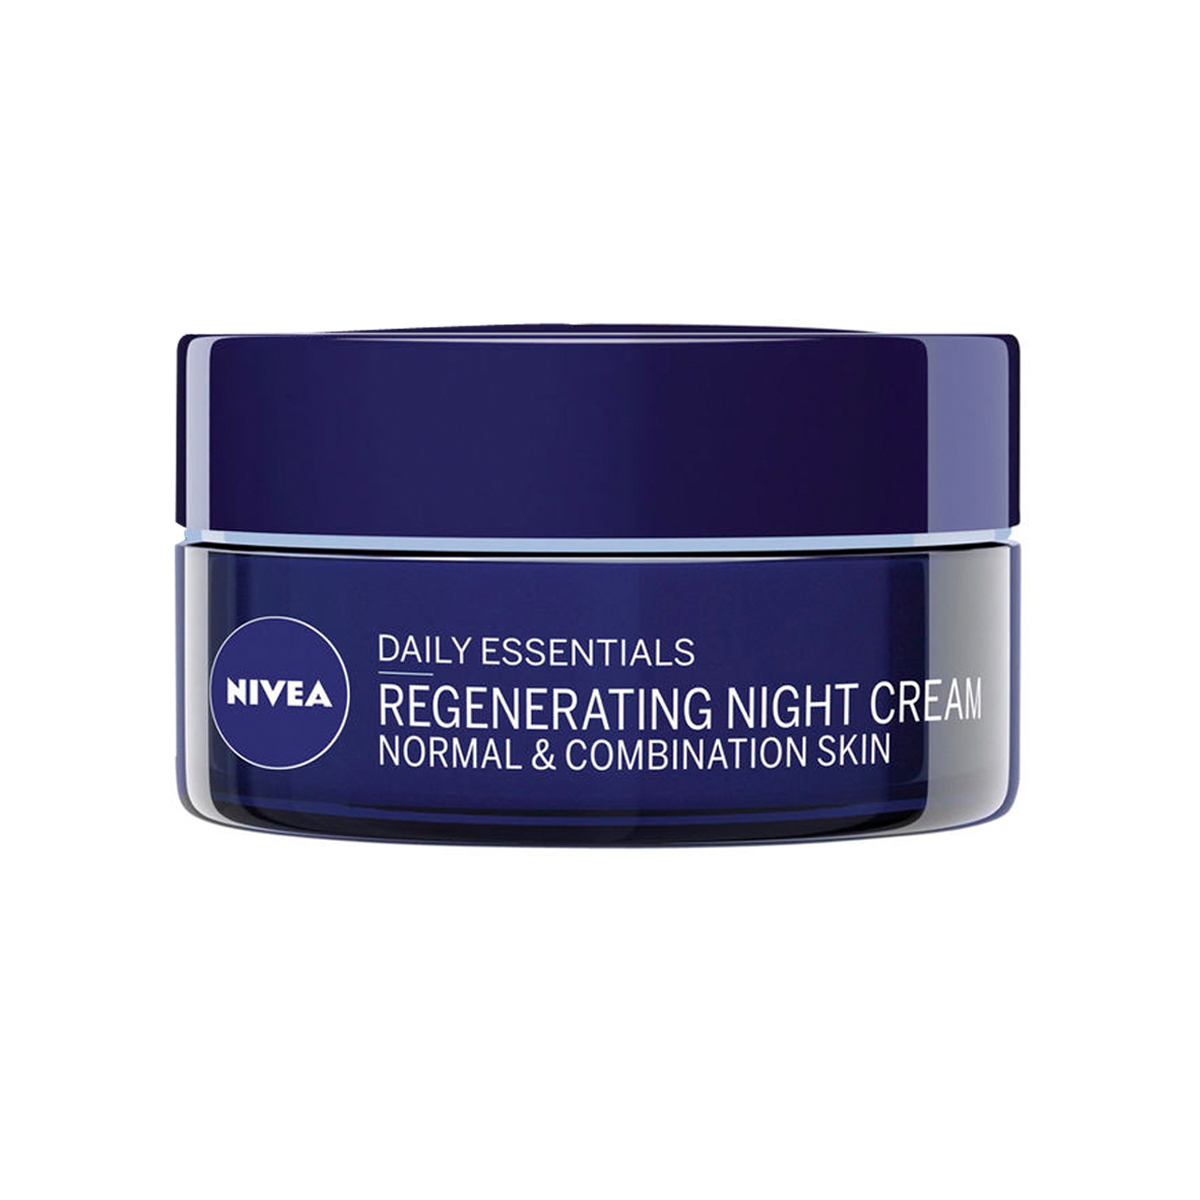 Nivea Daily Essentials Regenerating Night Cream for Normal/Combination Skin